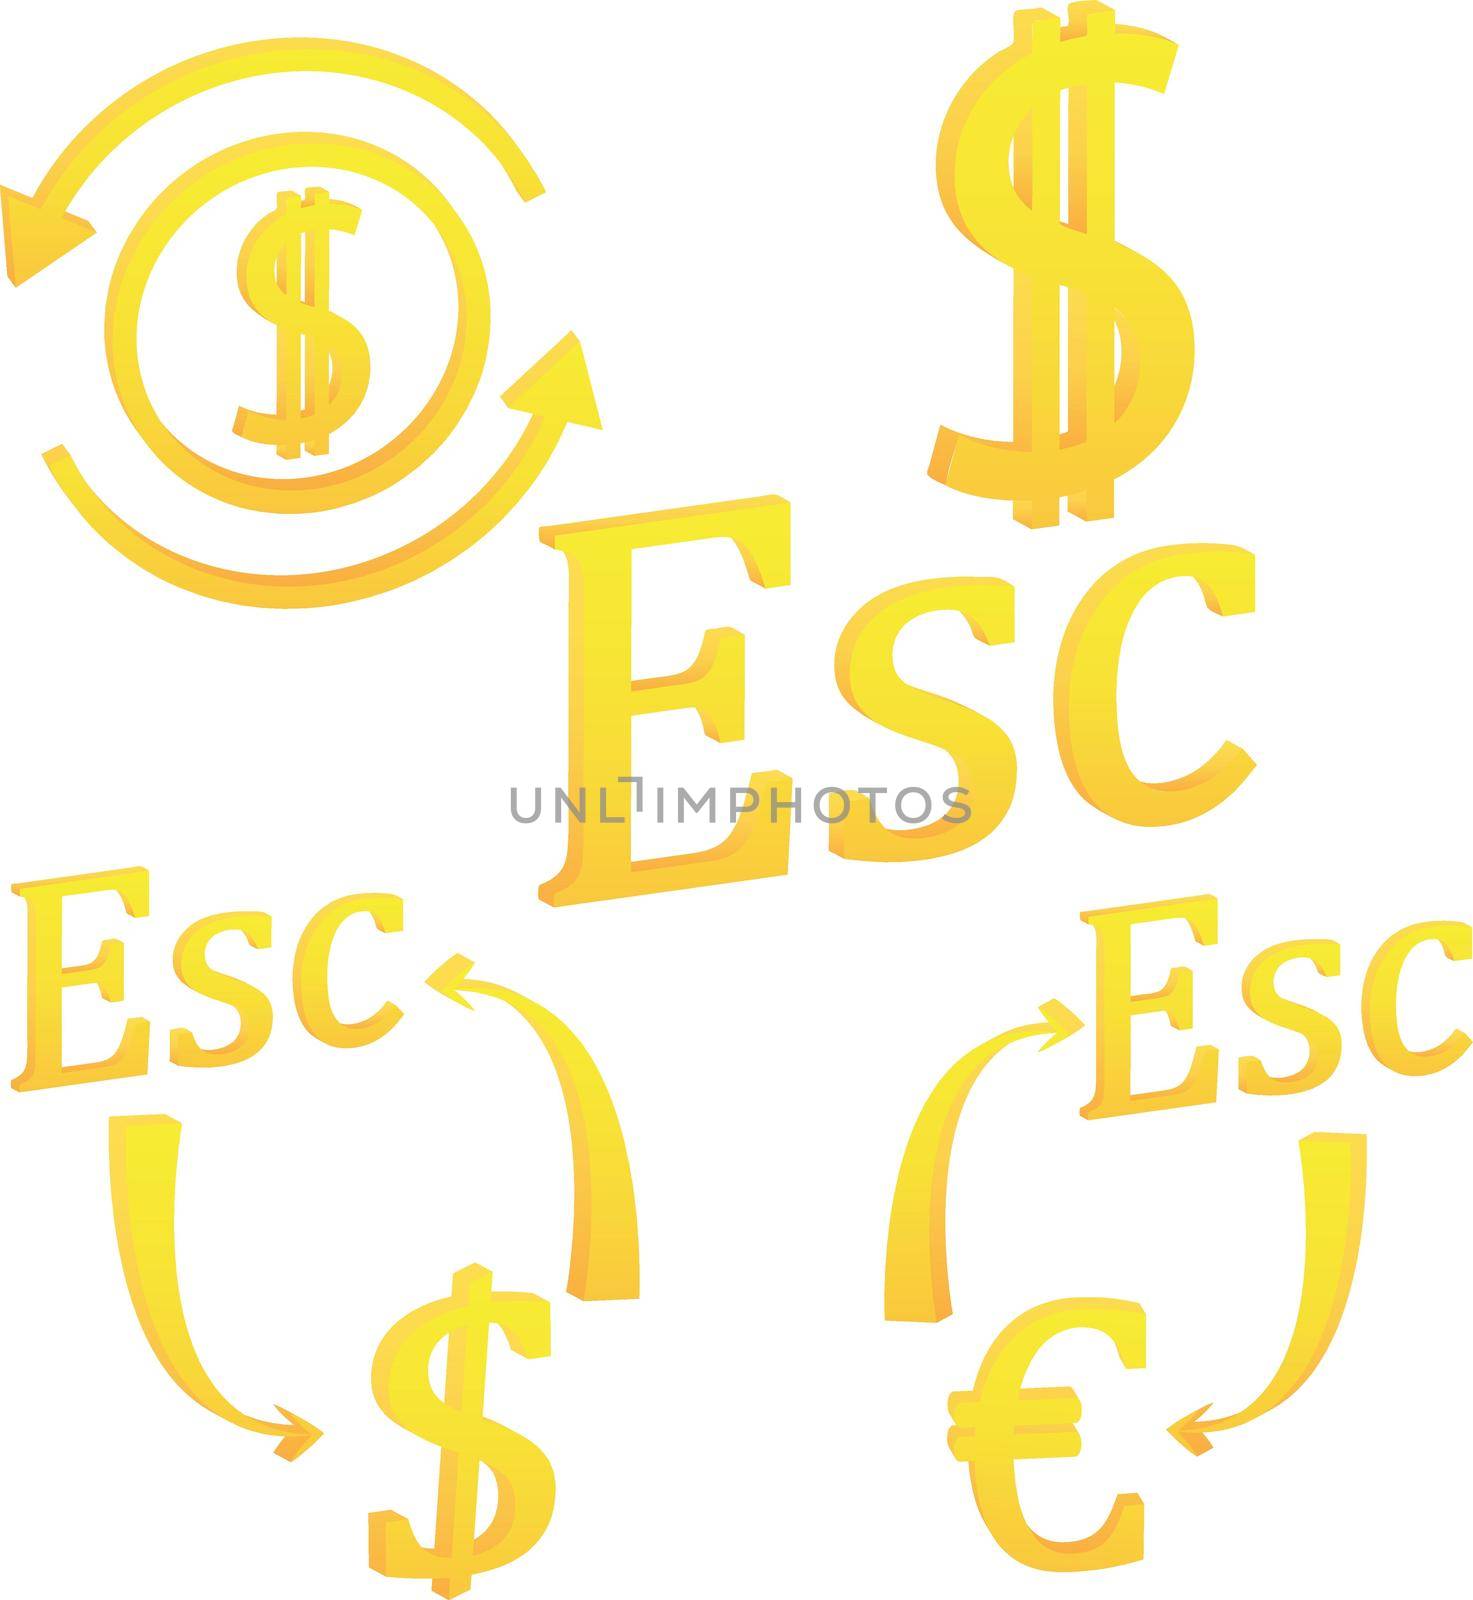 Cape Verde Escudo currency symbol icon by Olena758